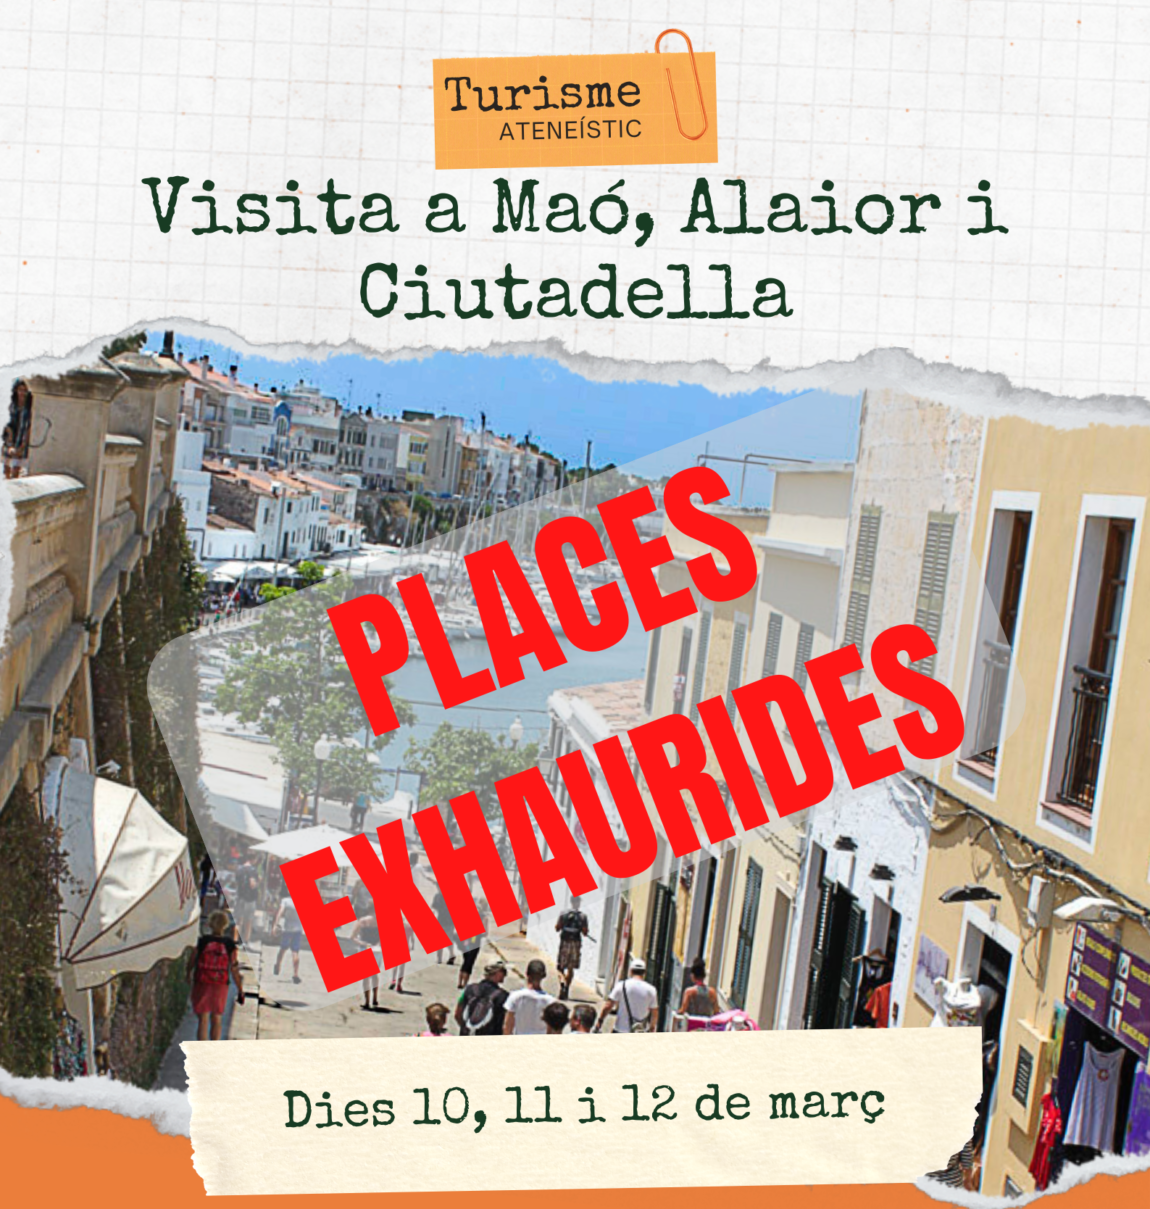 Vine a fer Turisme Ateneístic a Menorca!